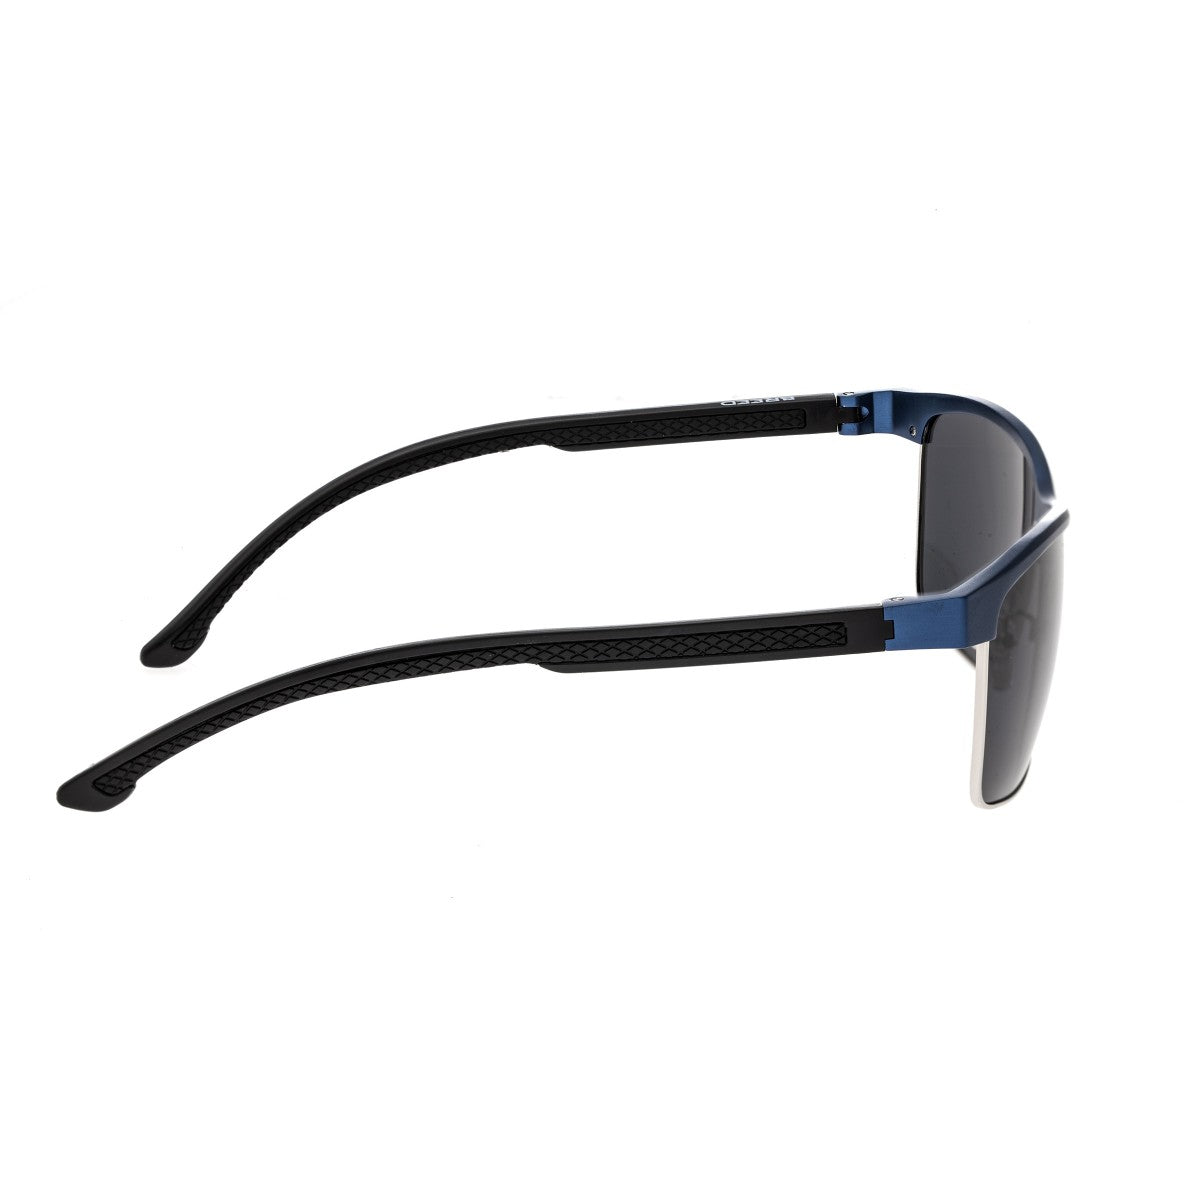 Breed Bode Aluminium Polarized Sunglasses - Blue/Black - BSG026BL